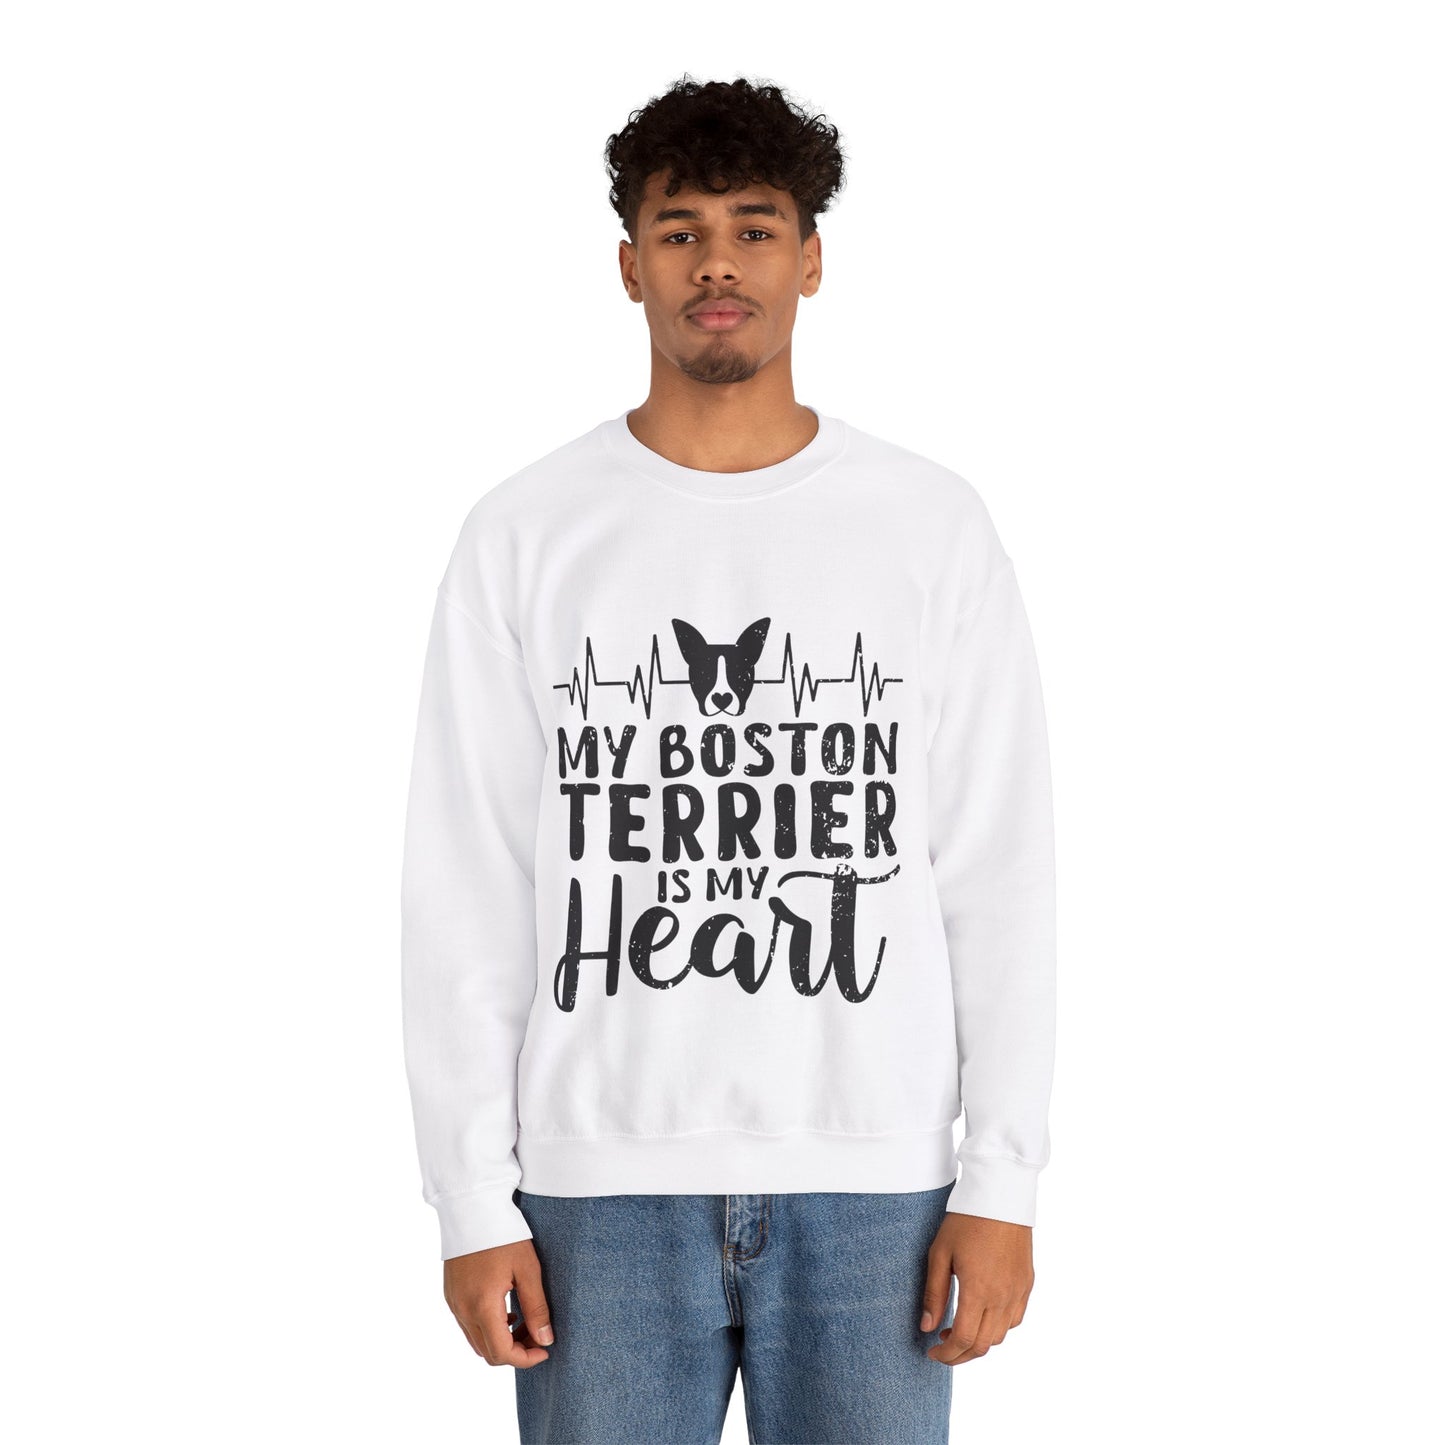 Snoopy  - Unisex Sweatshirt for Boston Terrier lovers